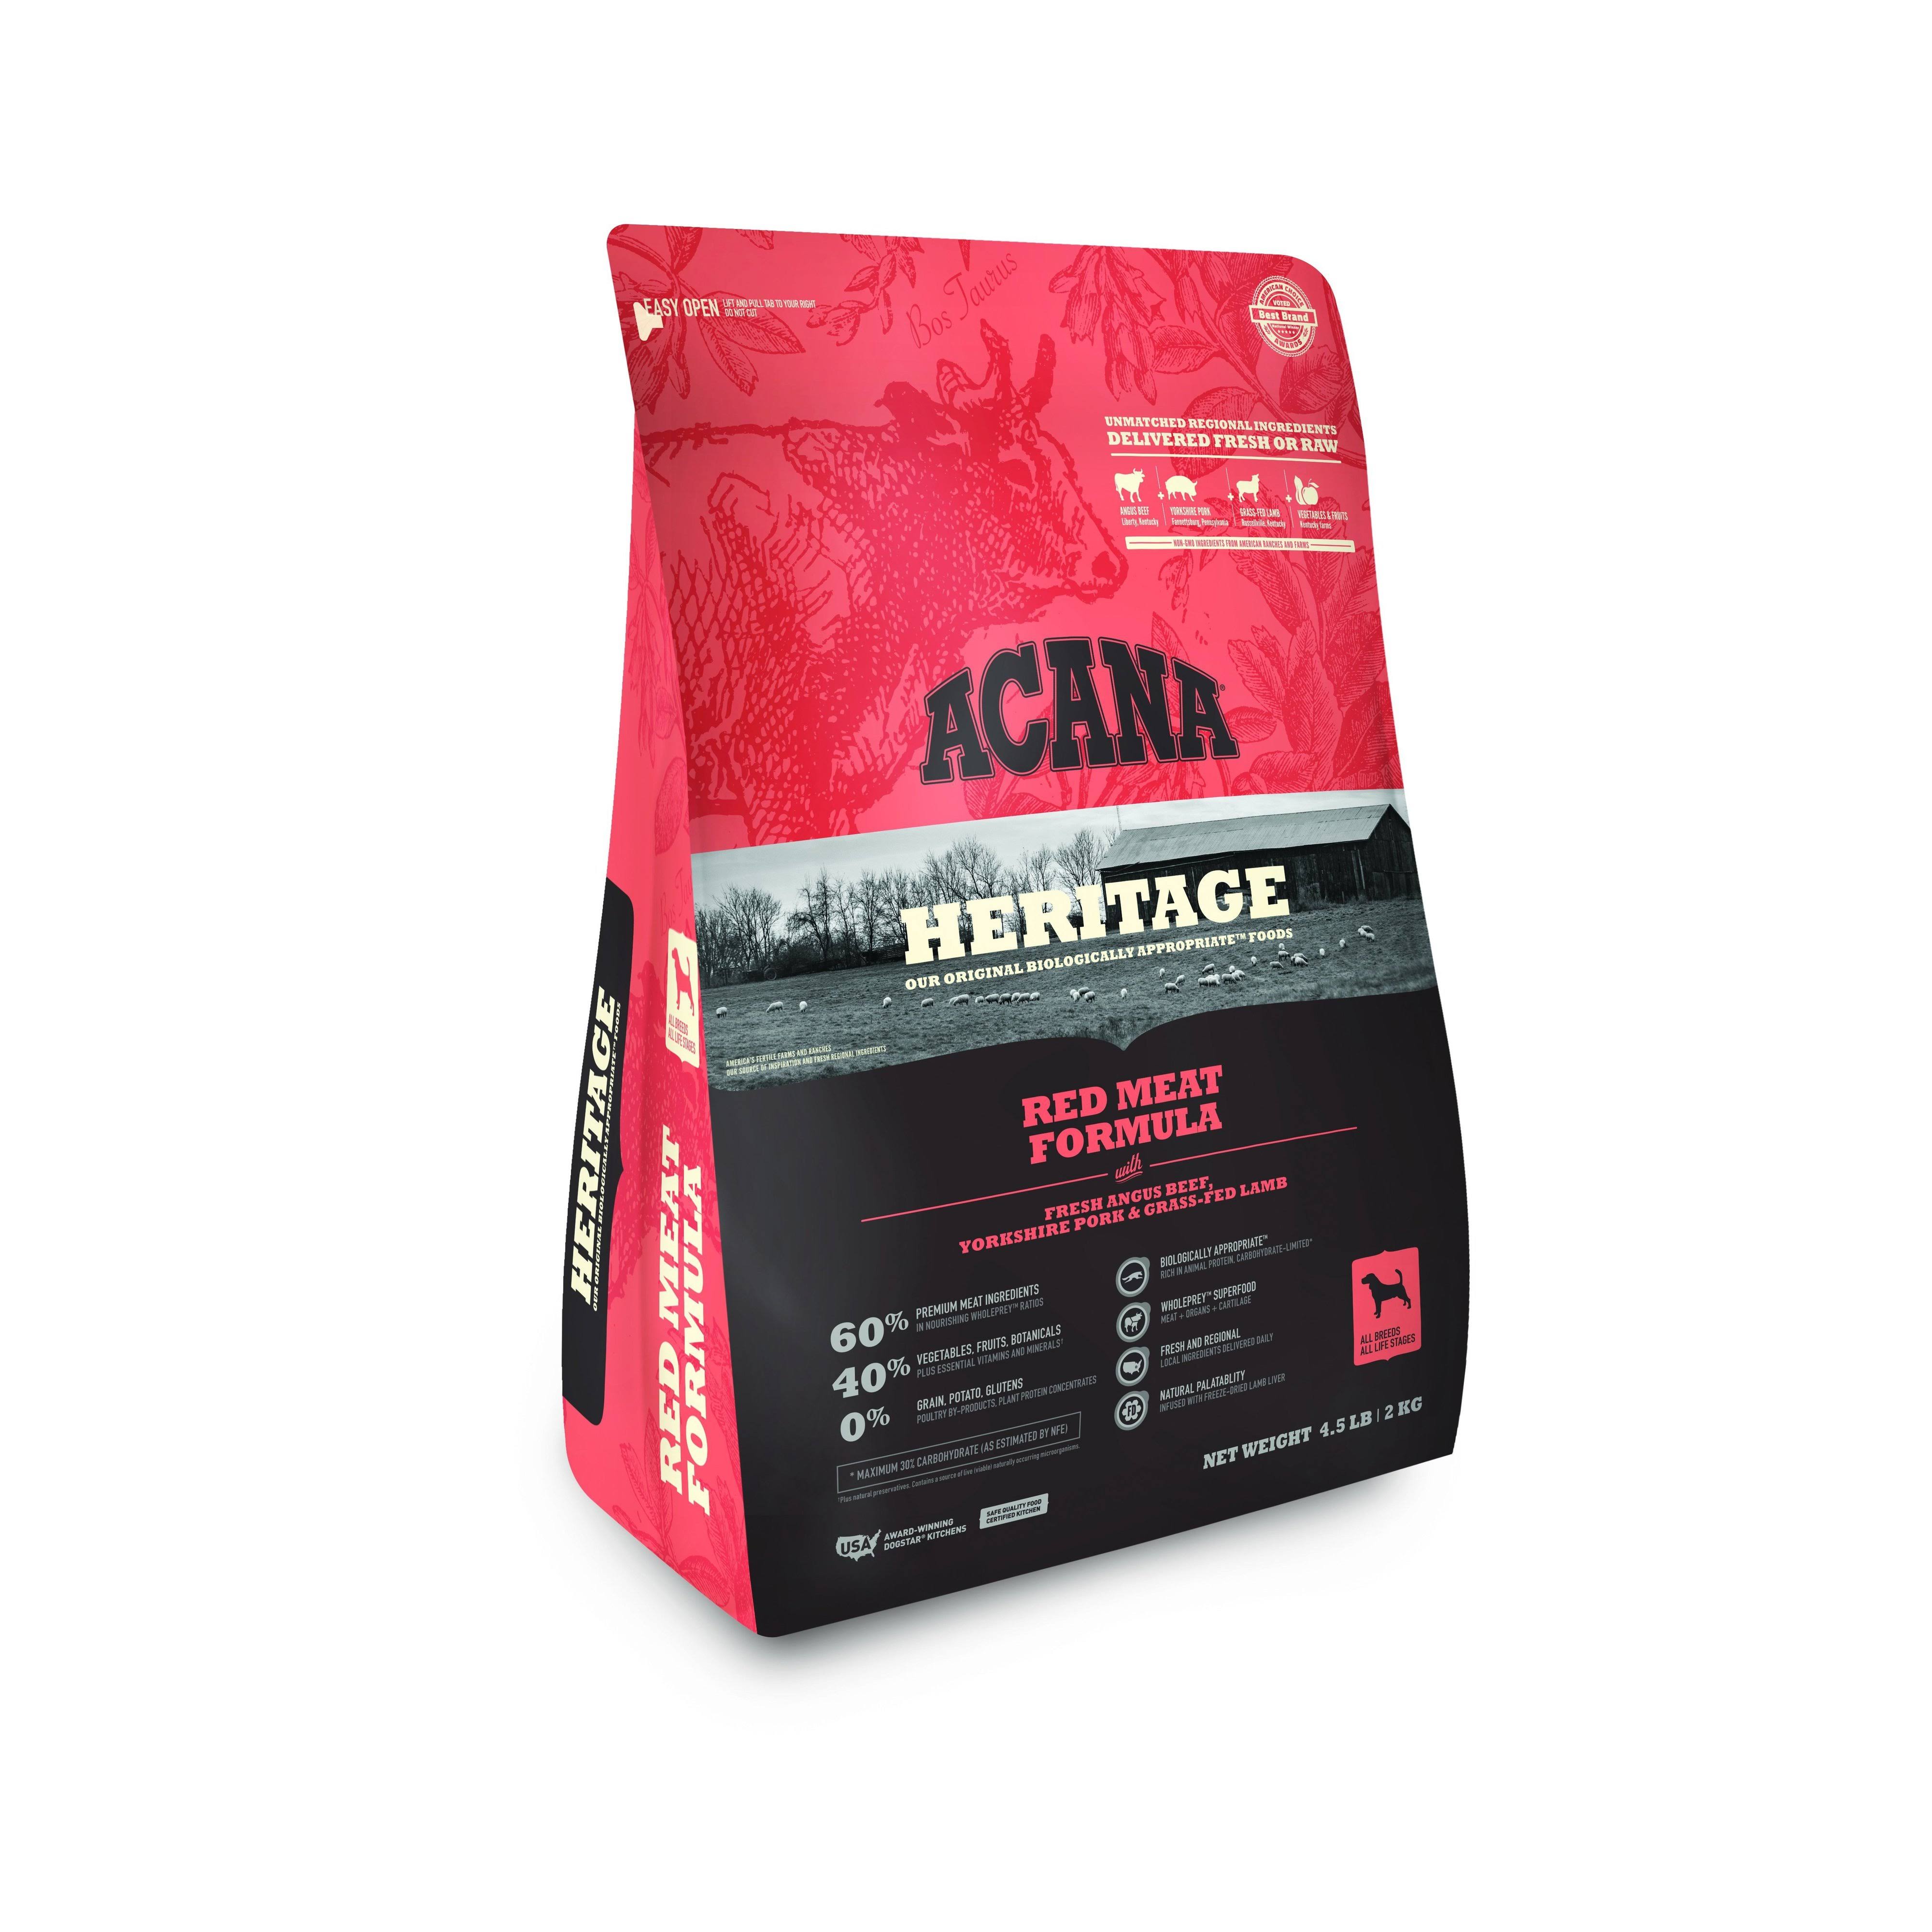 Acana Grain-Free Dry Dog Food - Heritage Meats Formula, 4.5lbs